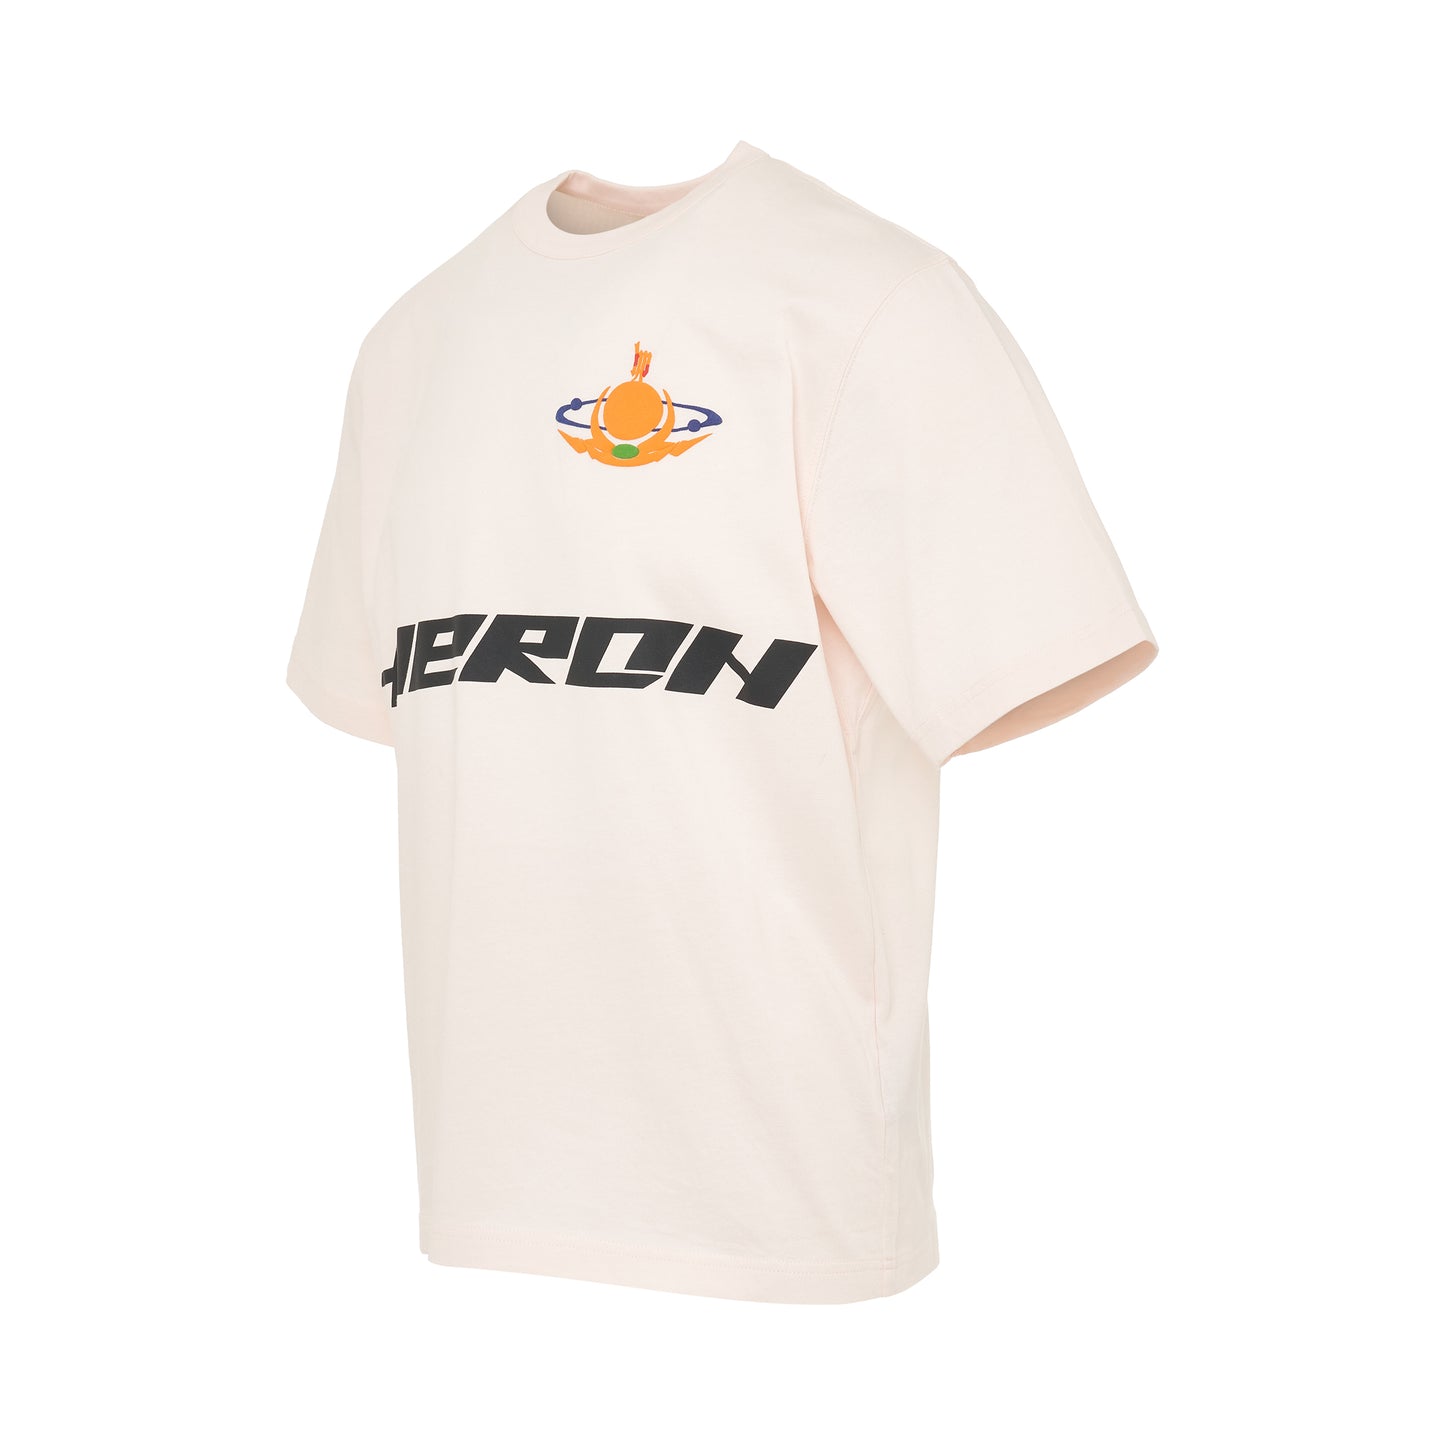 Heron Globe Burn Short Sleeve T-Shirt in Pink/Black